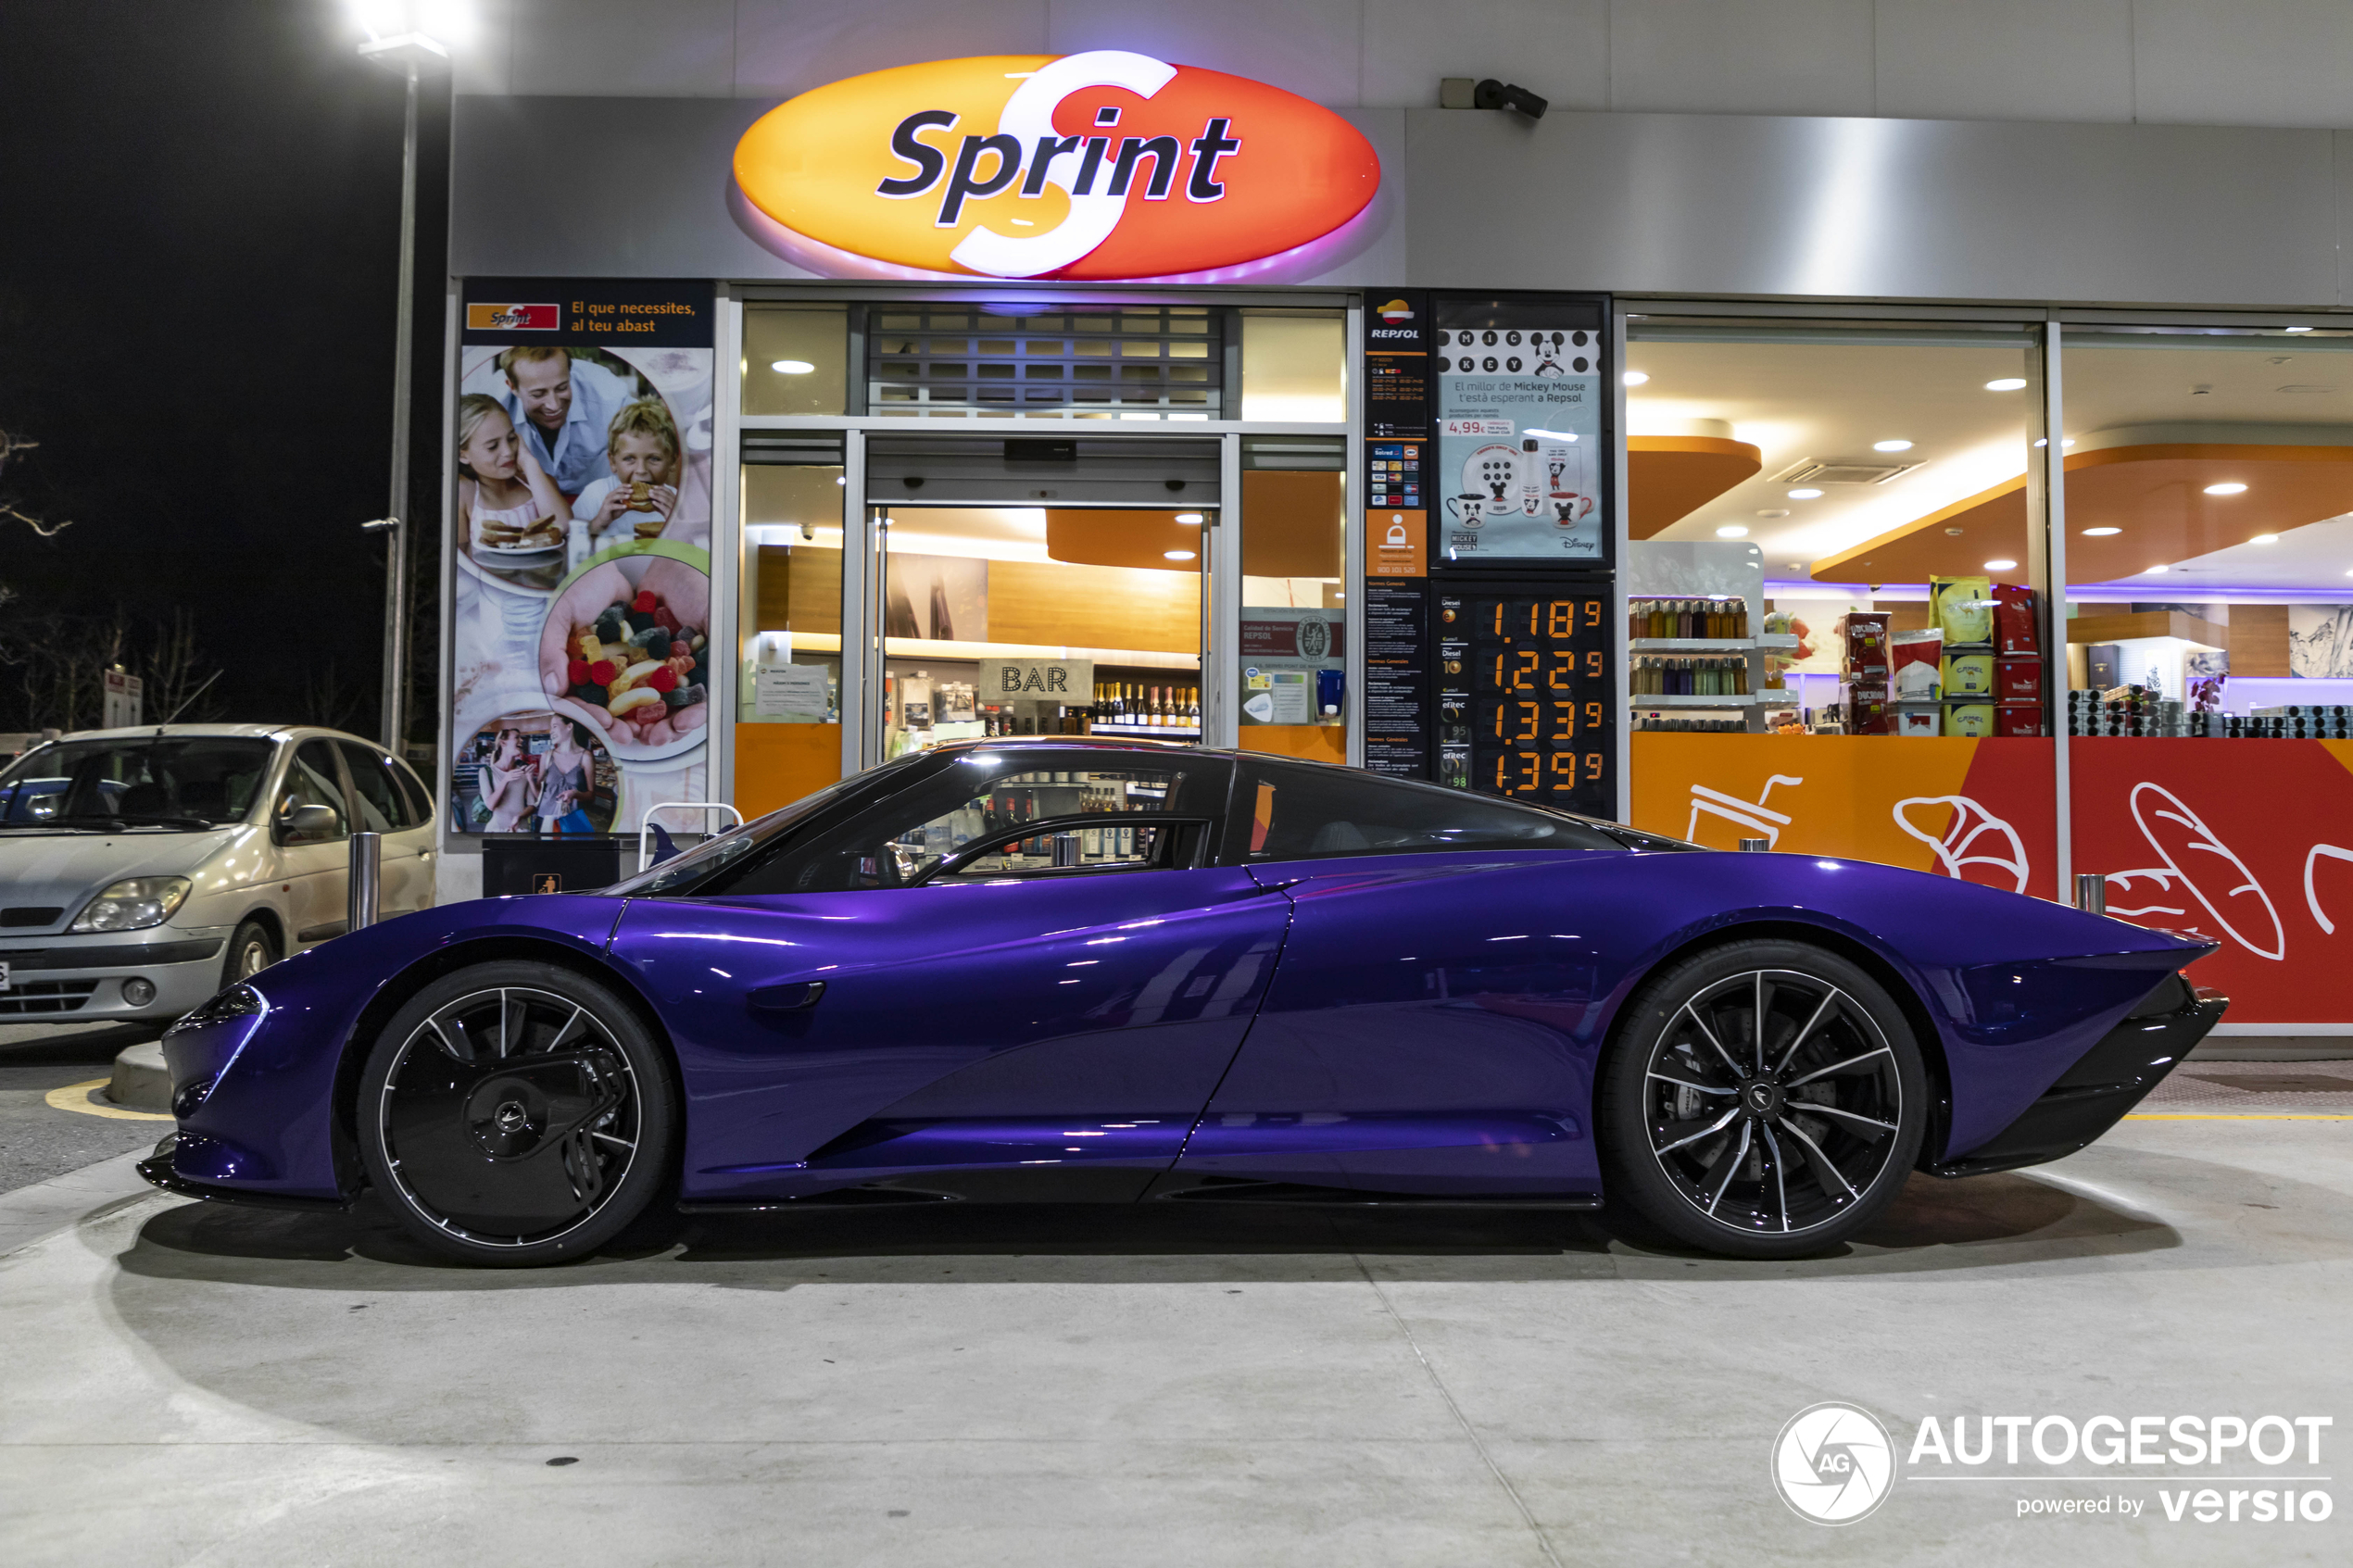 A purple Speedtail shows up in Andorra